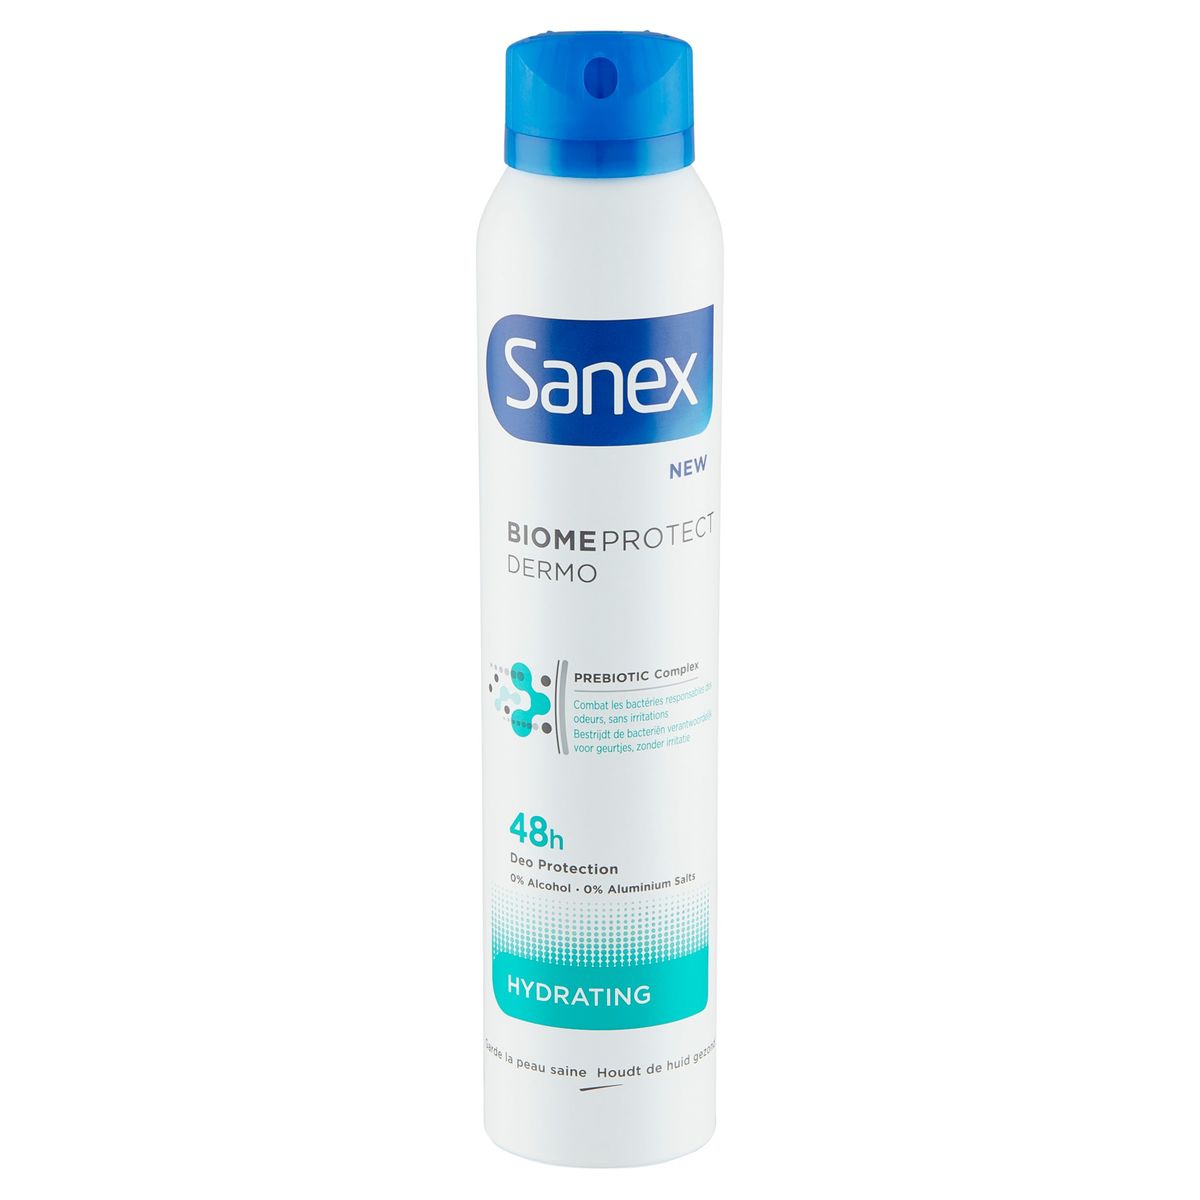 Sanex spray Biomeprotect Dermo Hydrating 200ml